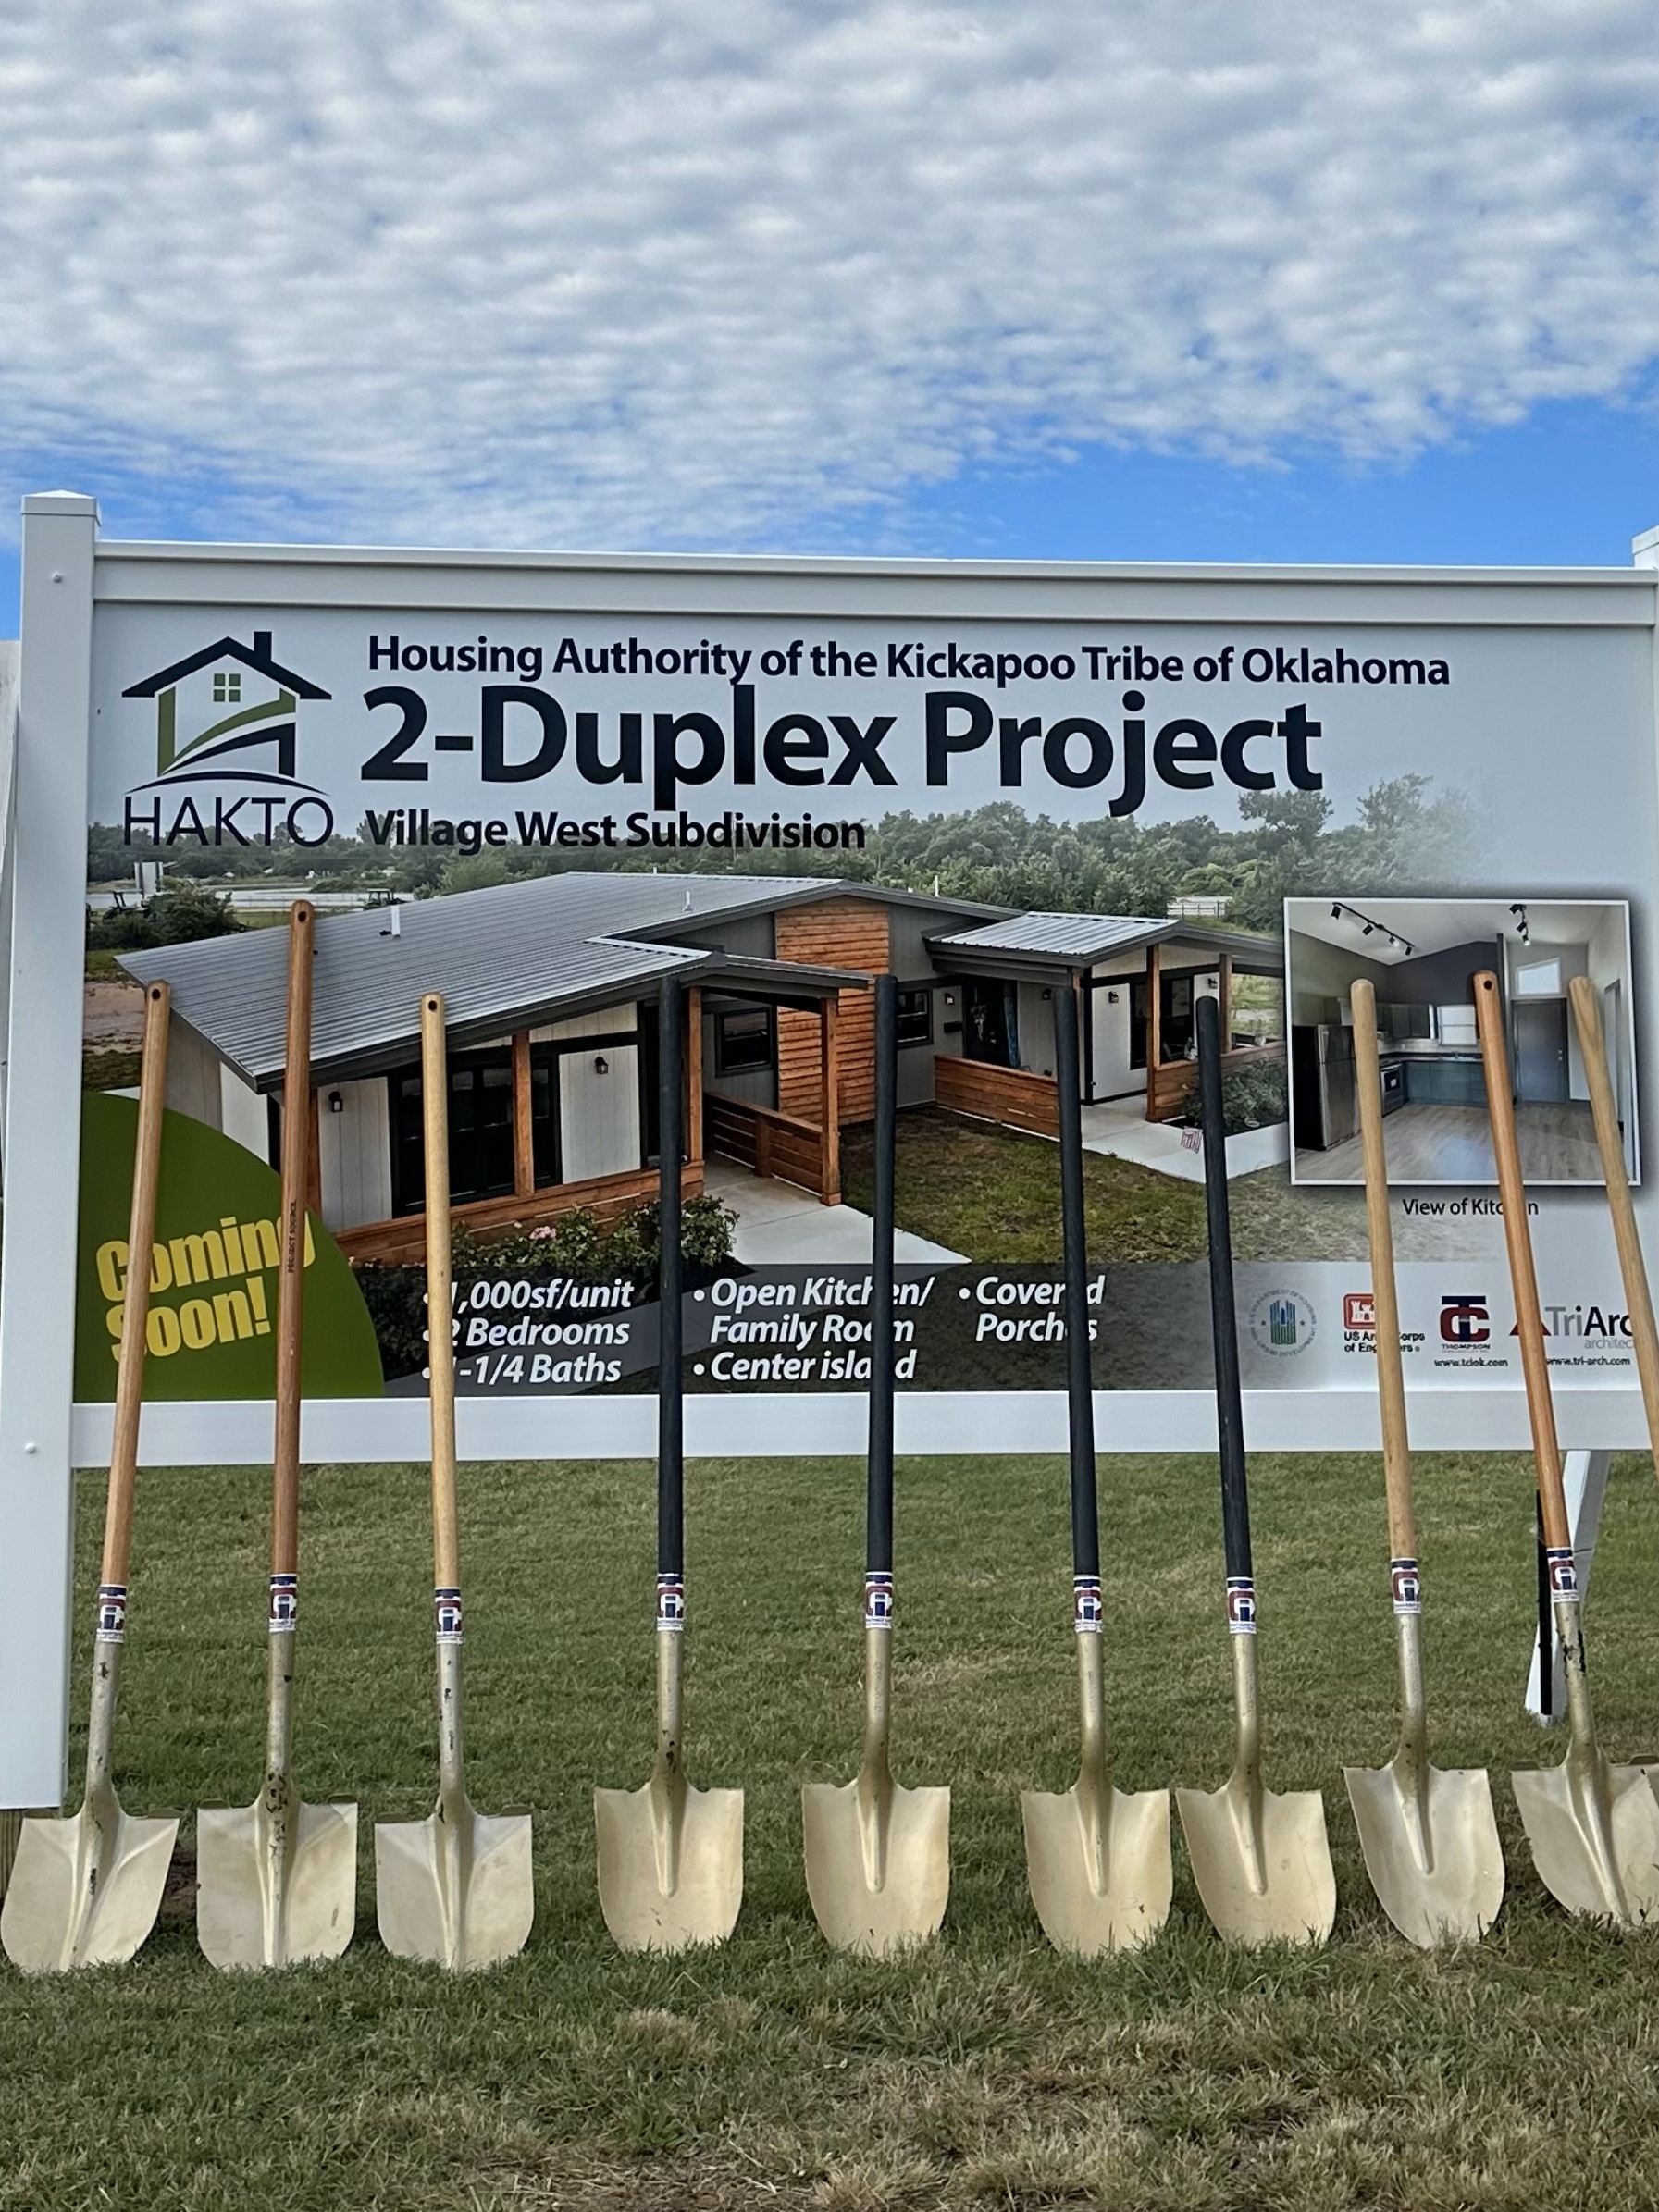 HAKTO 2-Duplex Project